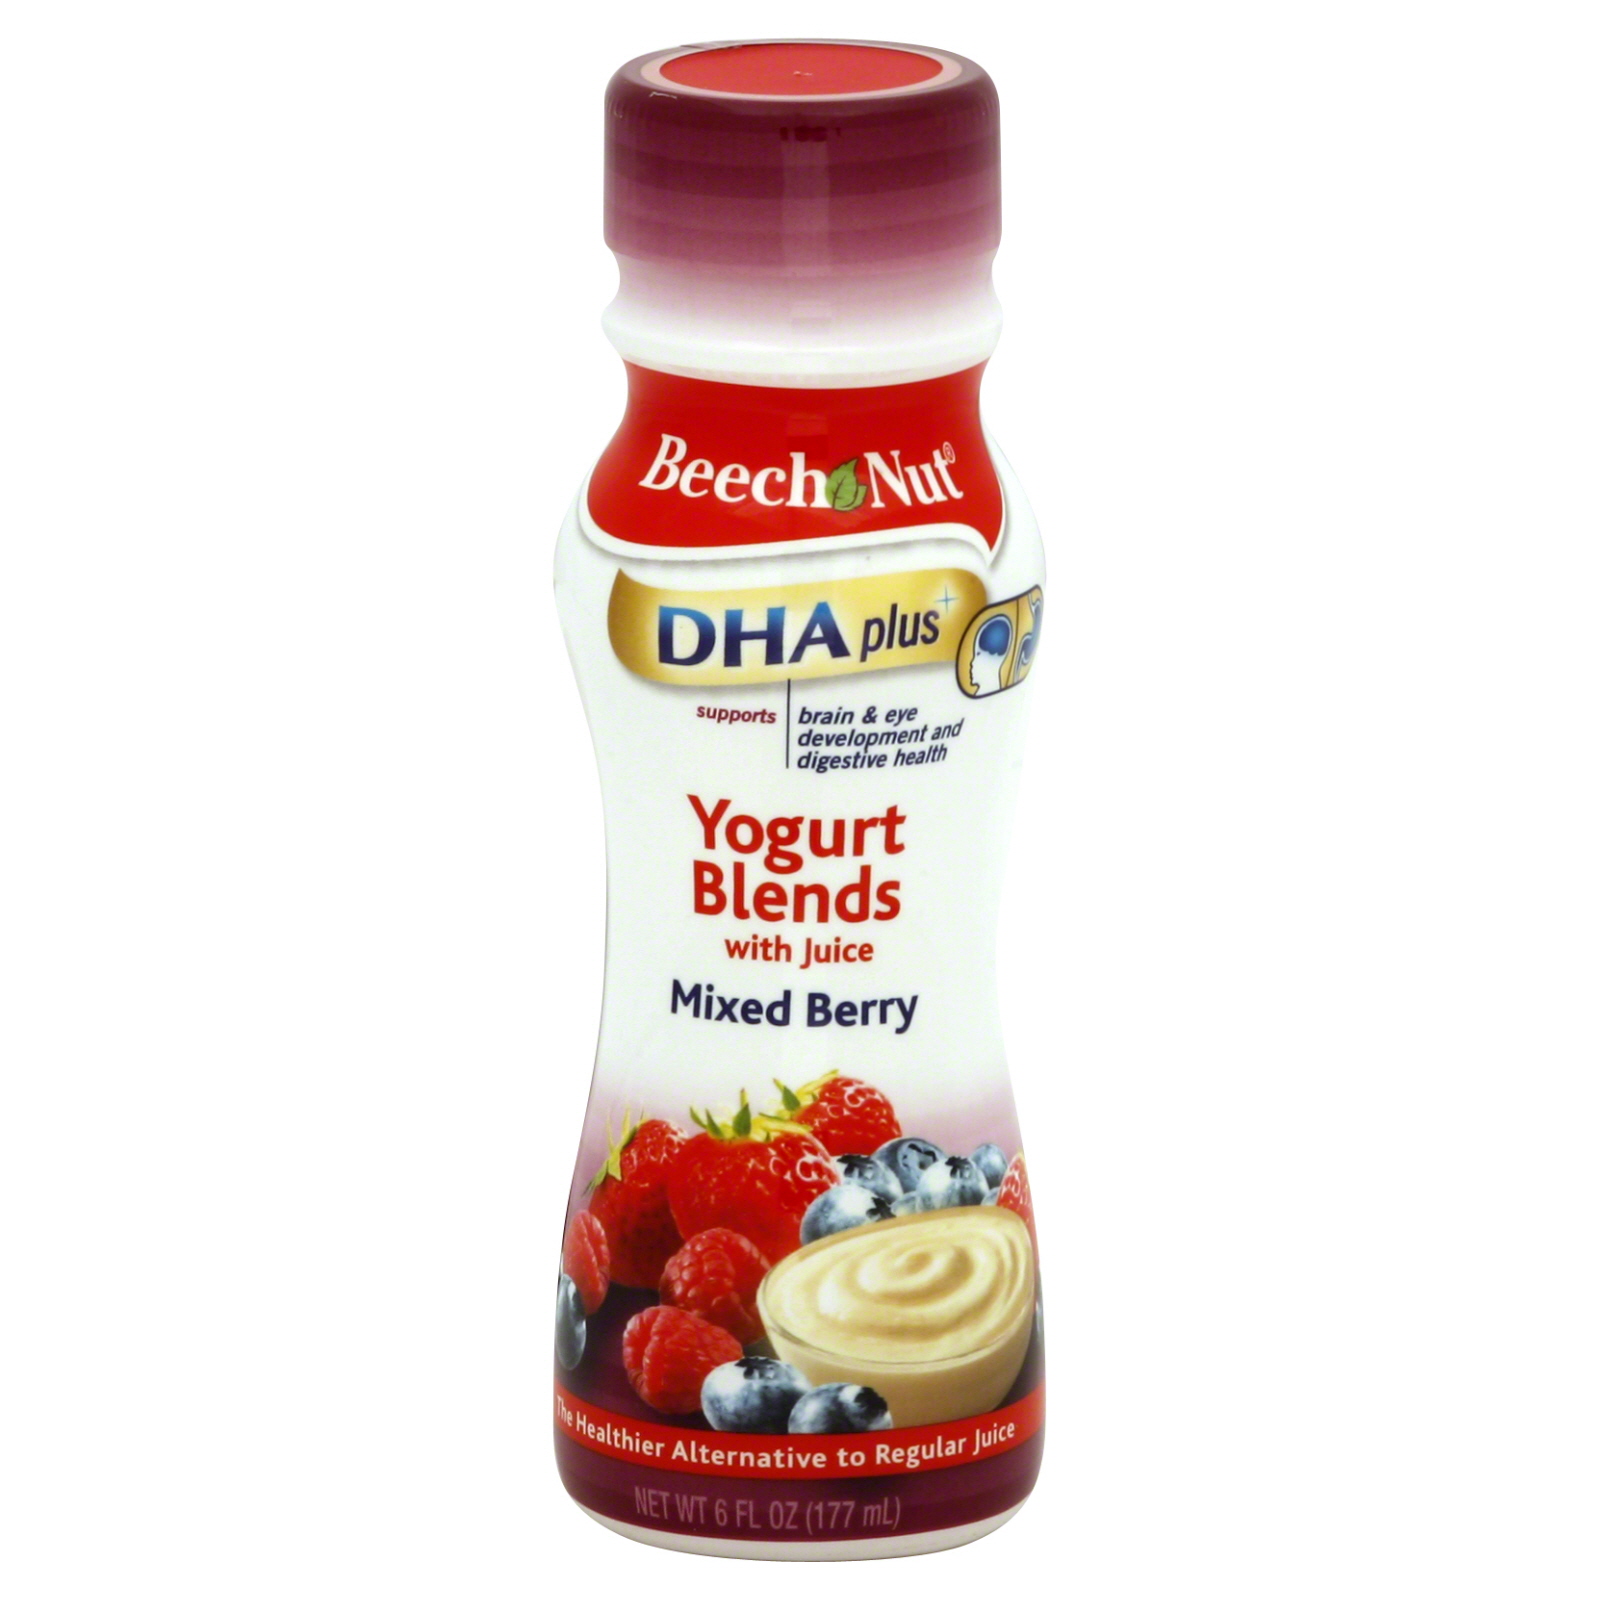 Beech-Nut DHA Plus Yogurt Blends, with Juice, Mixed Berry, 6 fl oz (177 ml)